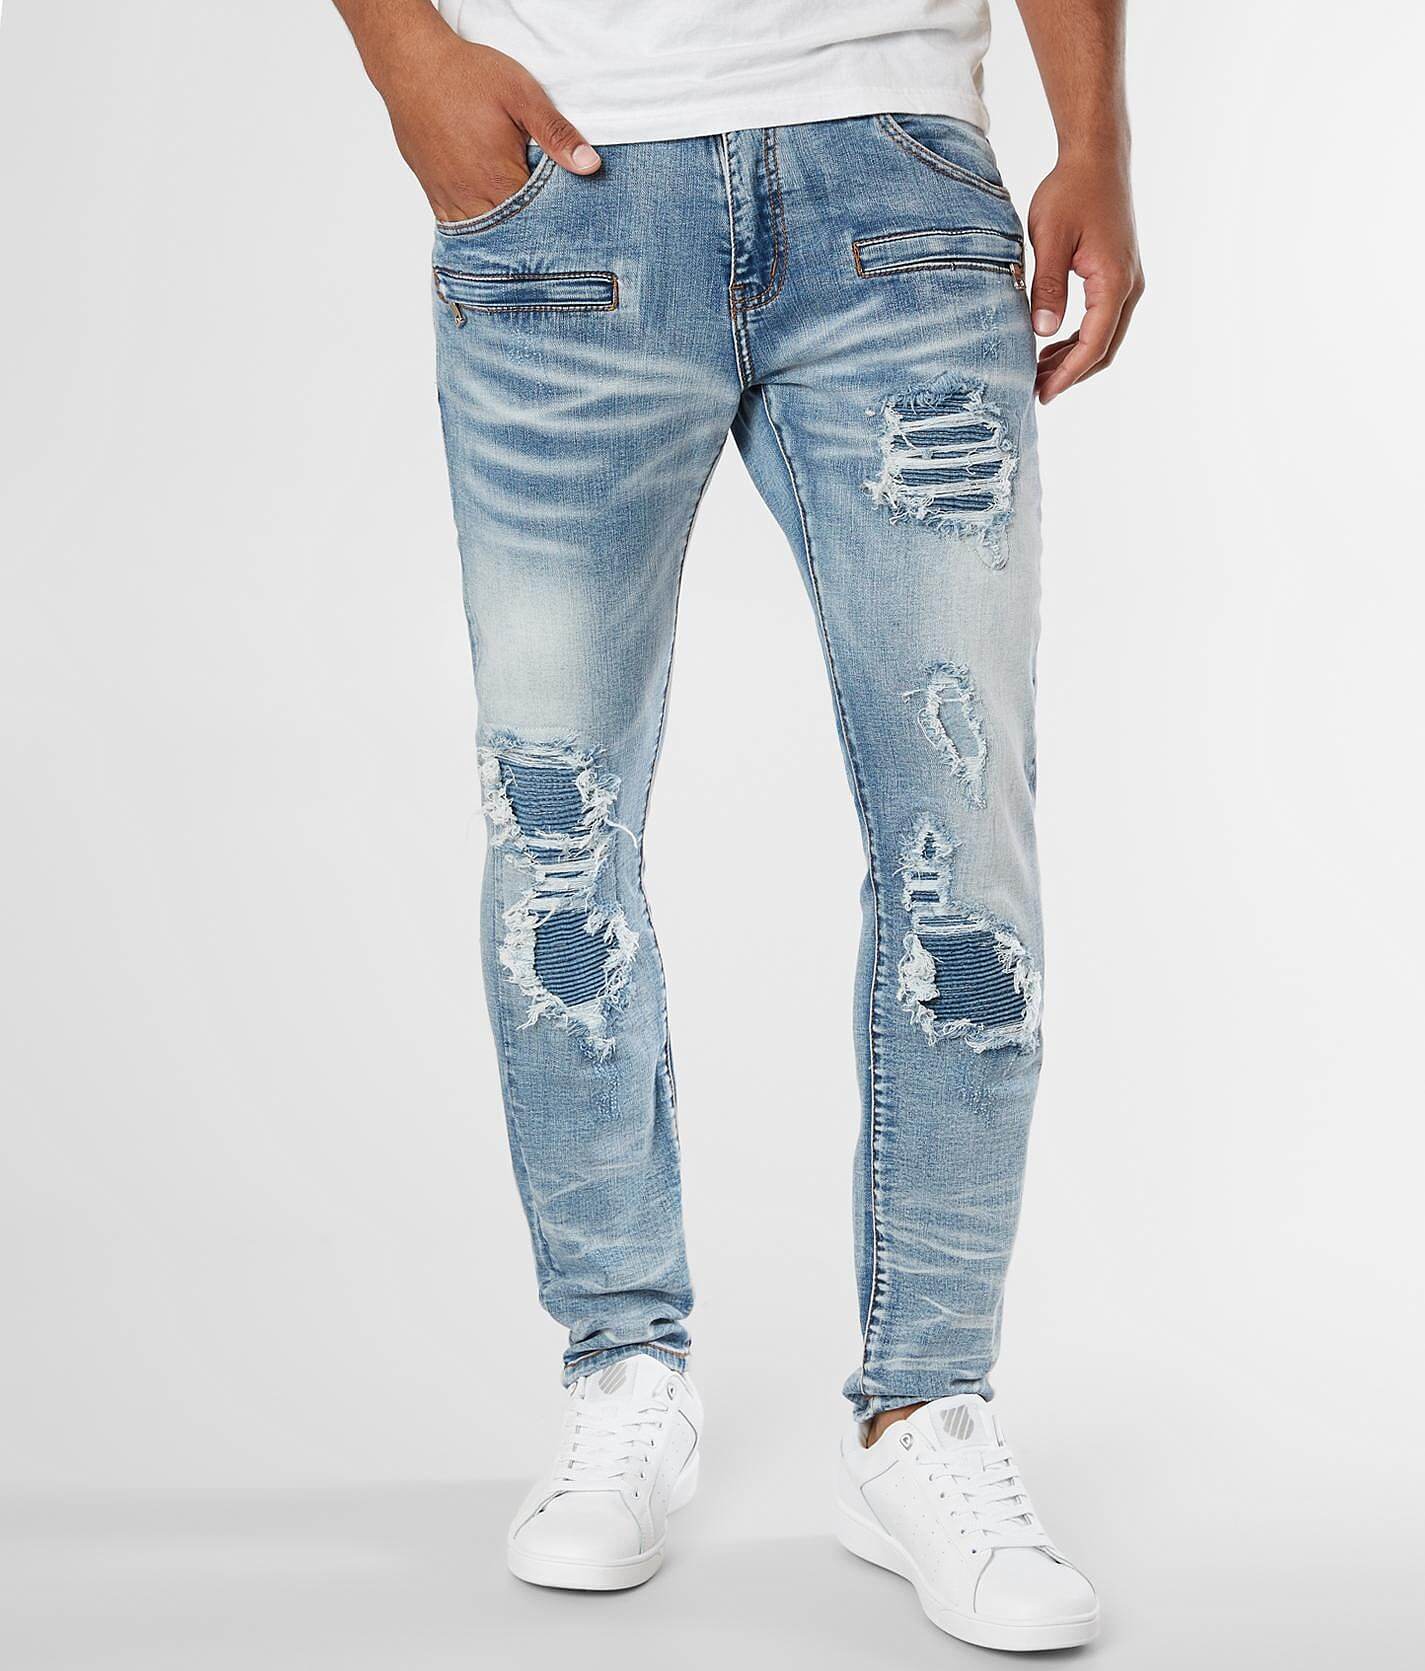 crysp denim jeans